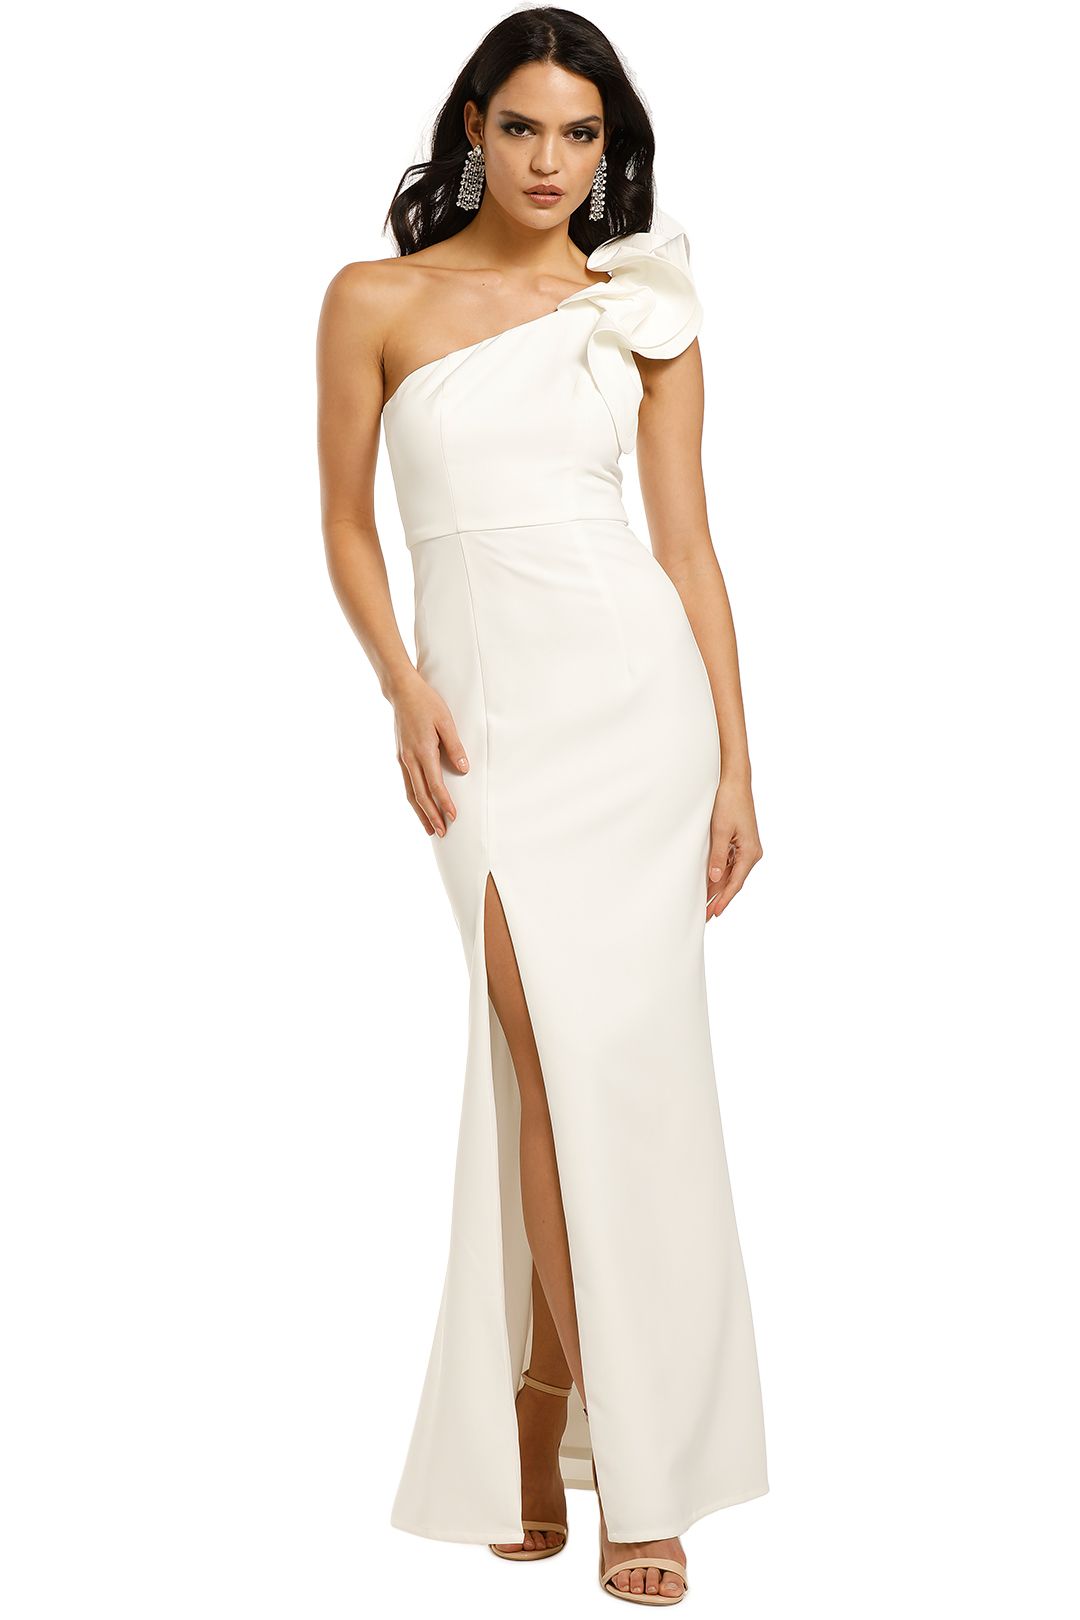 Bariano - Sue Frill Gown - White